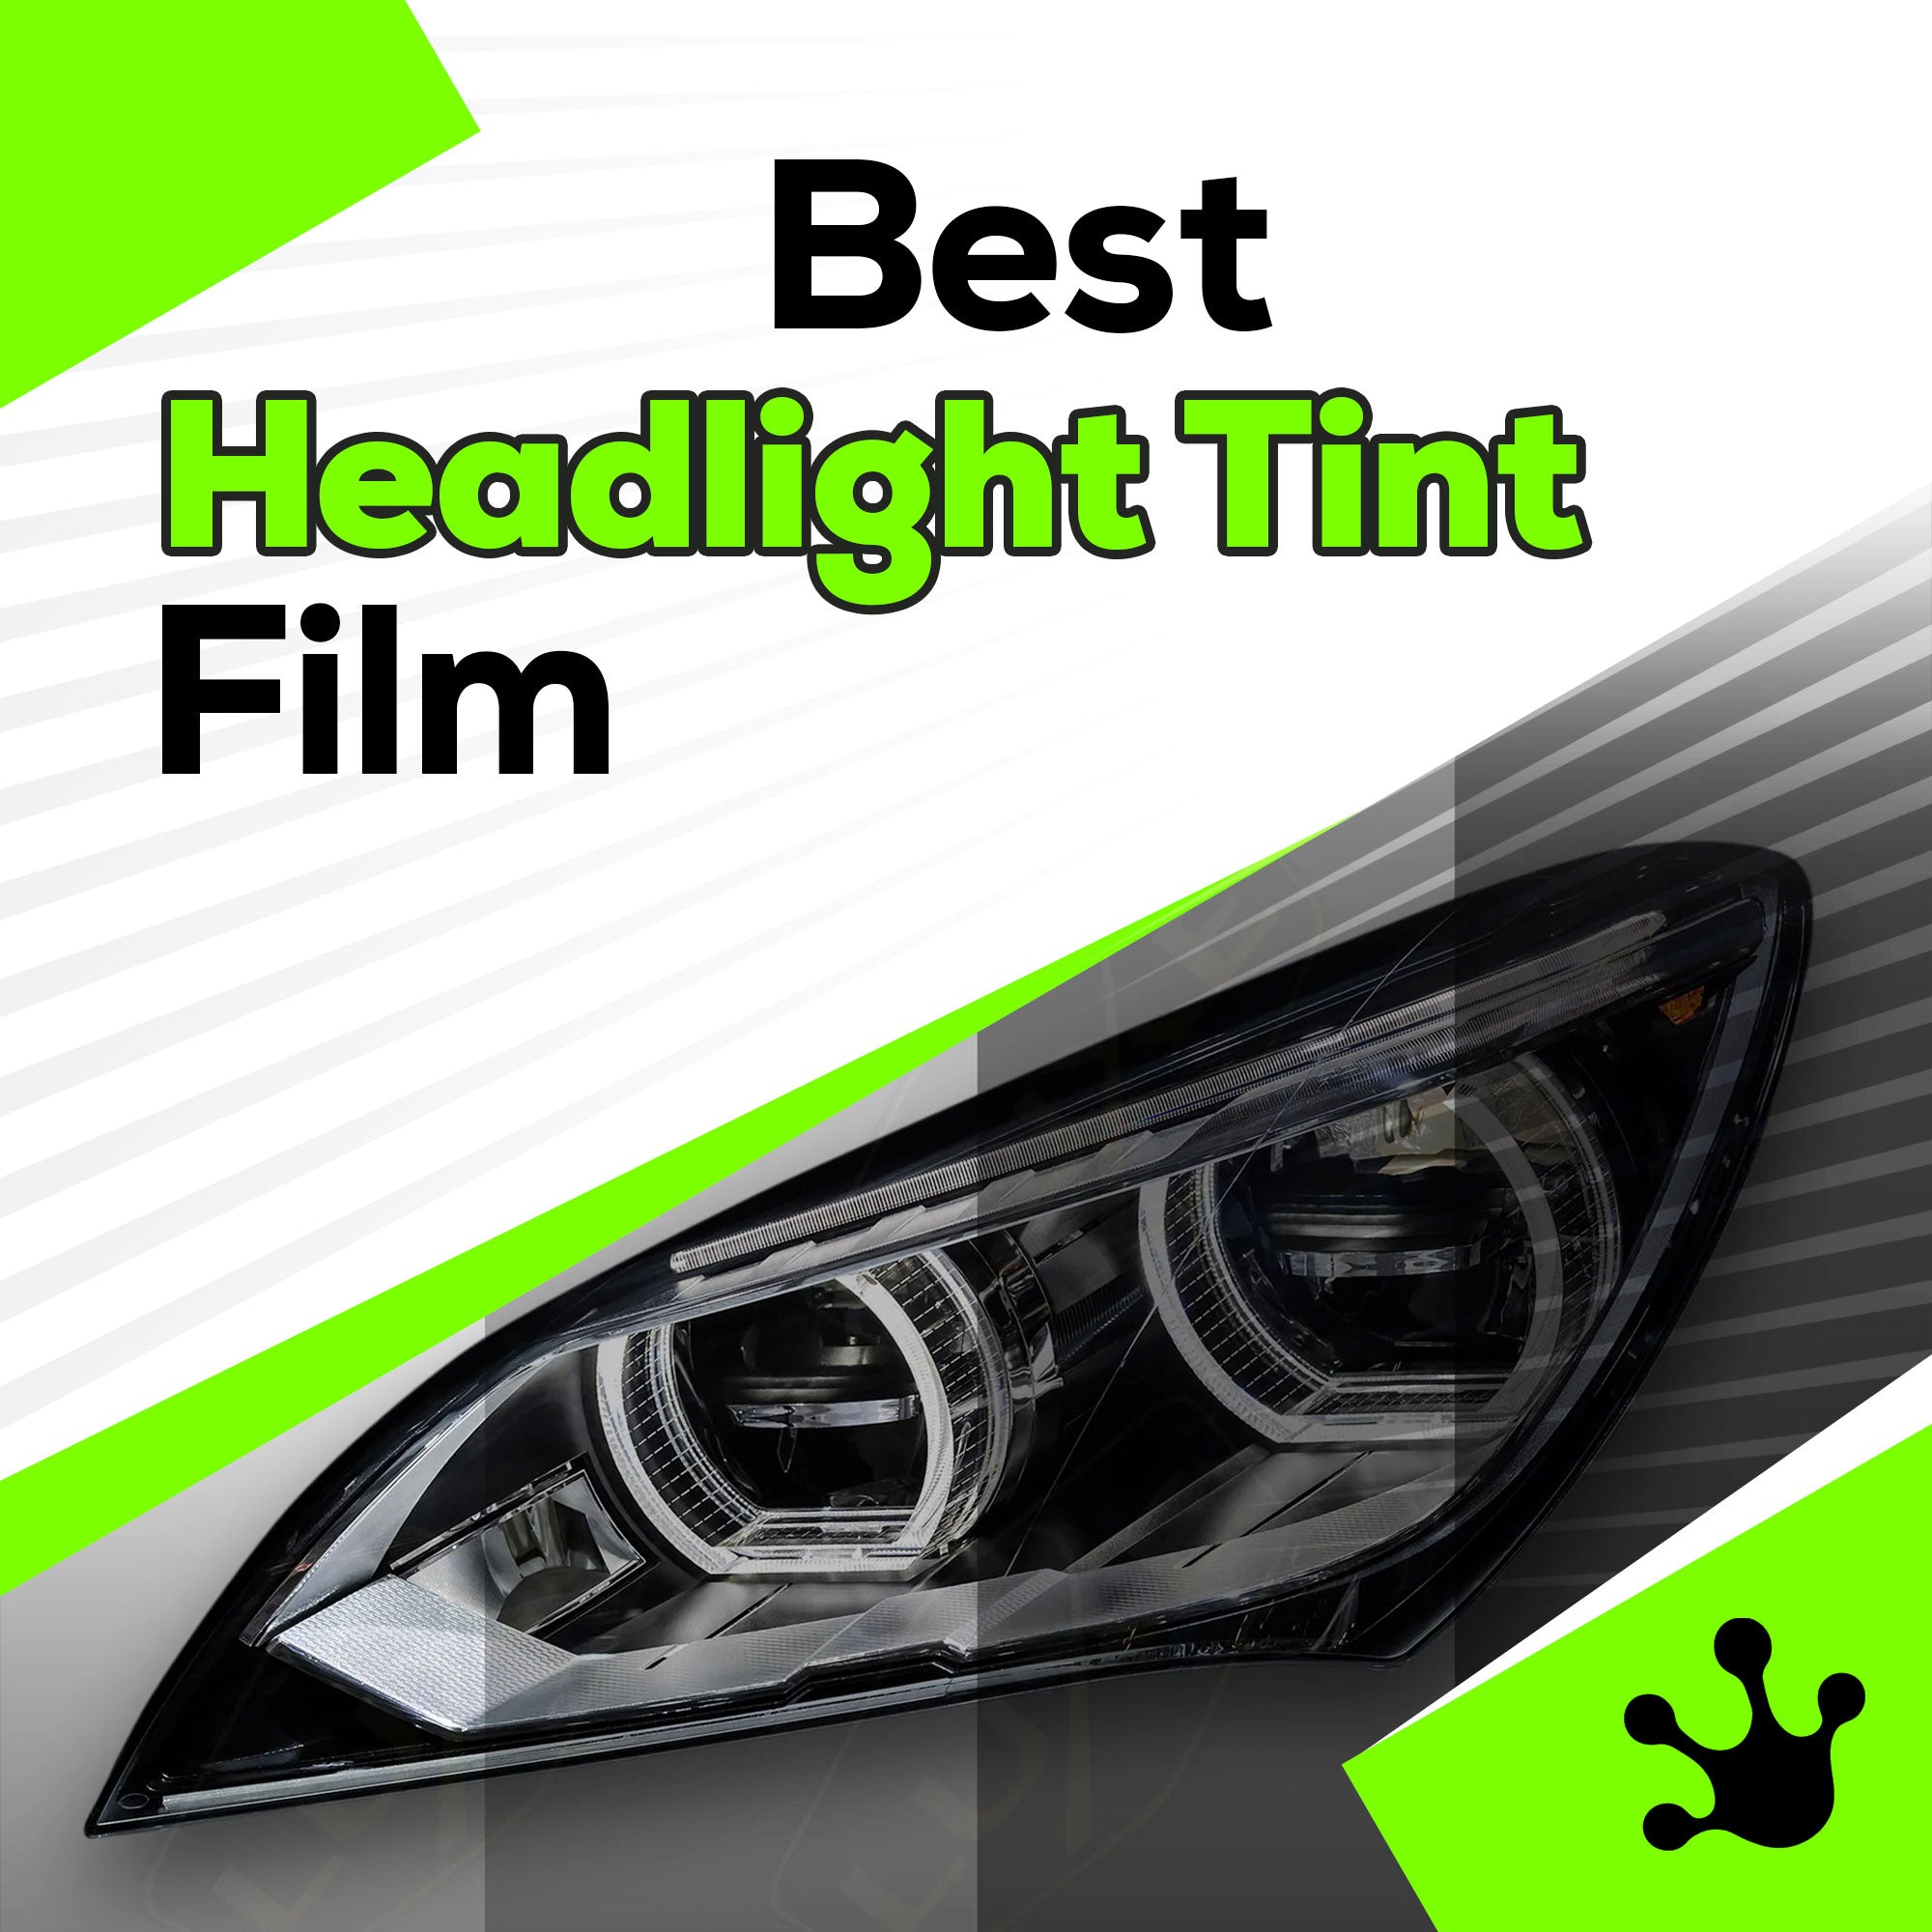 Best Headlight Tint Film